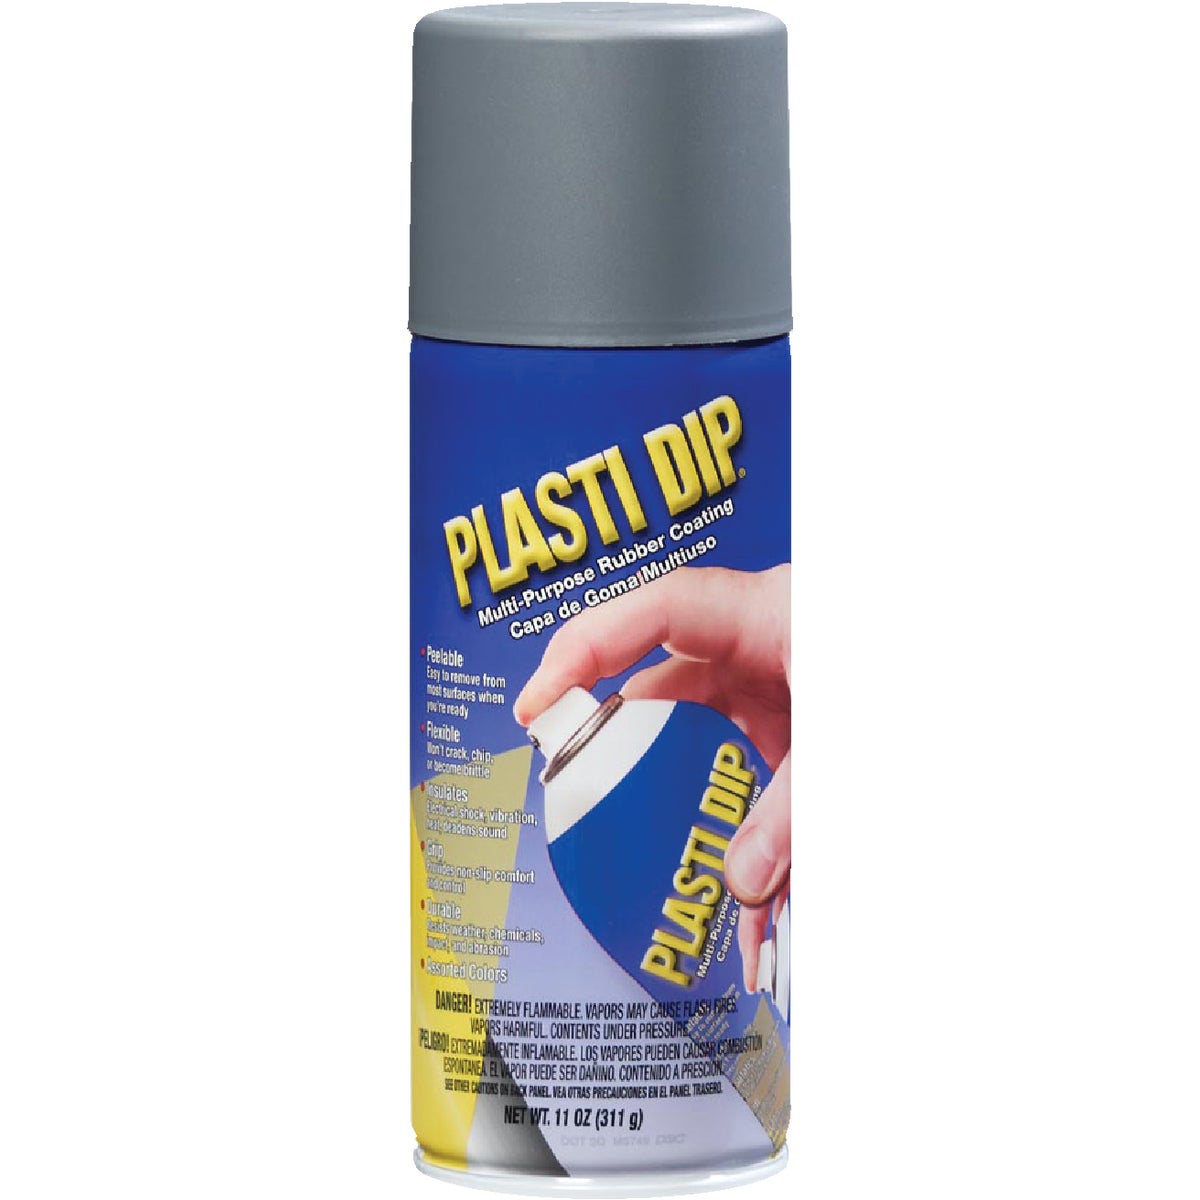 Performix Plasti Dip Gunmetal 11 Oz. Aerosol Rubber Coating Rubber Coating Spray Paint